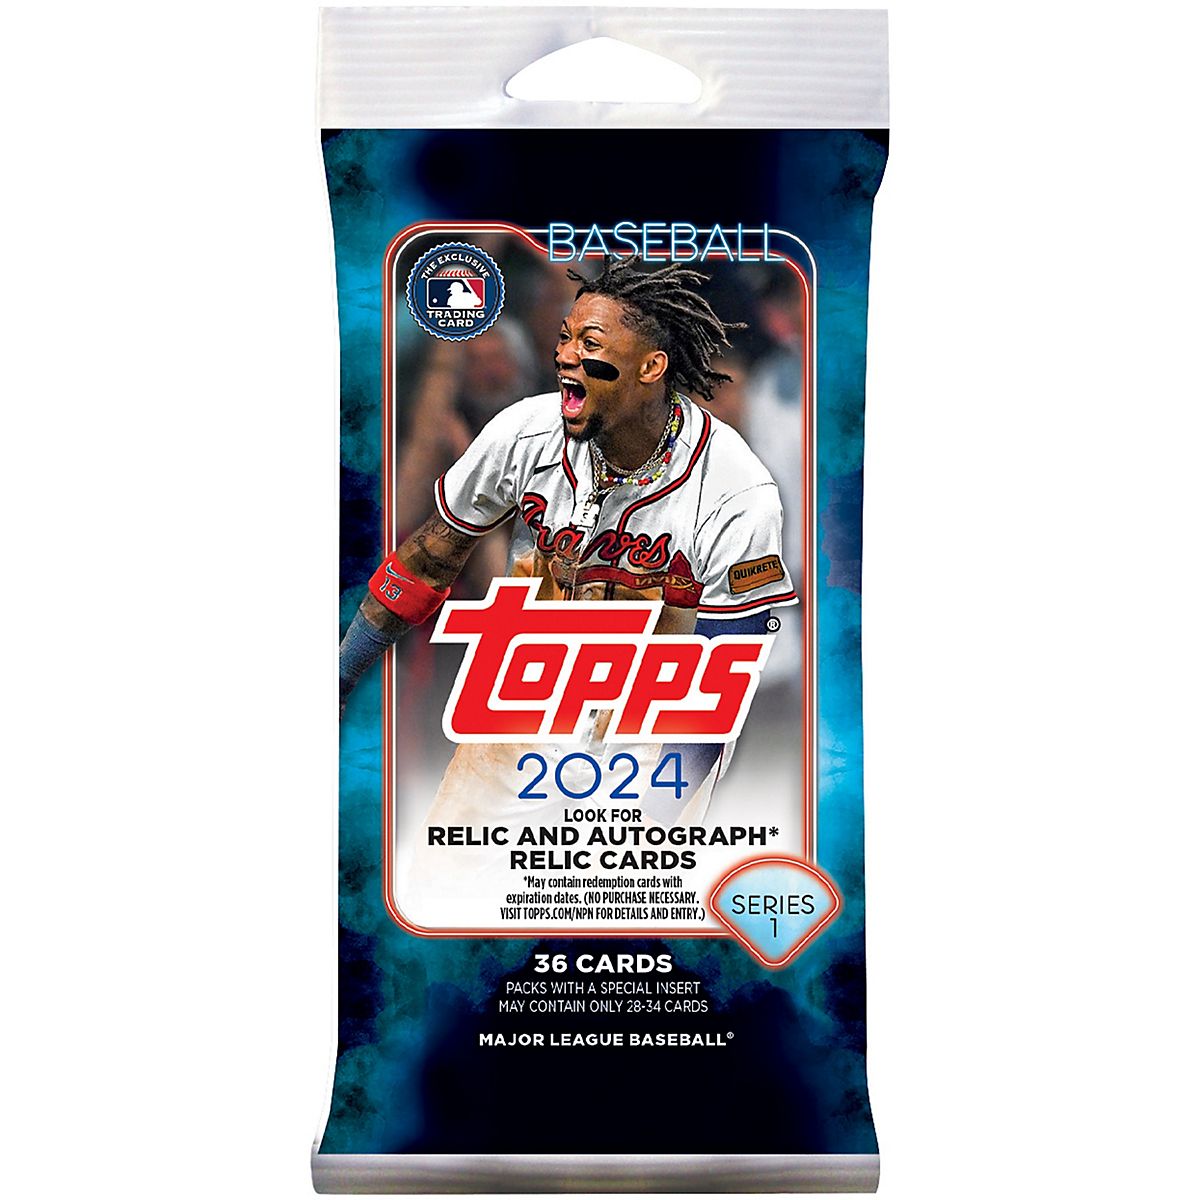 Topps 2024 Series 1 Baseball Card Fat Pack Academy